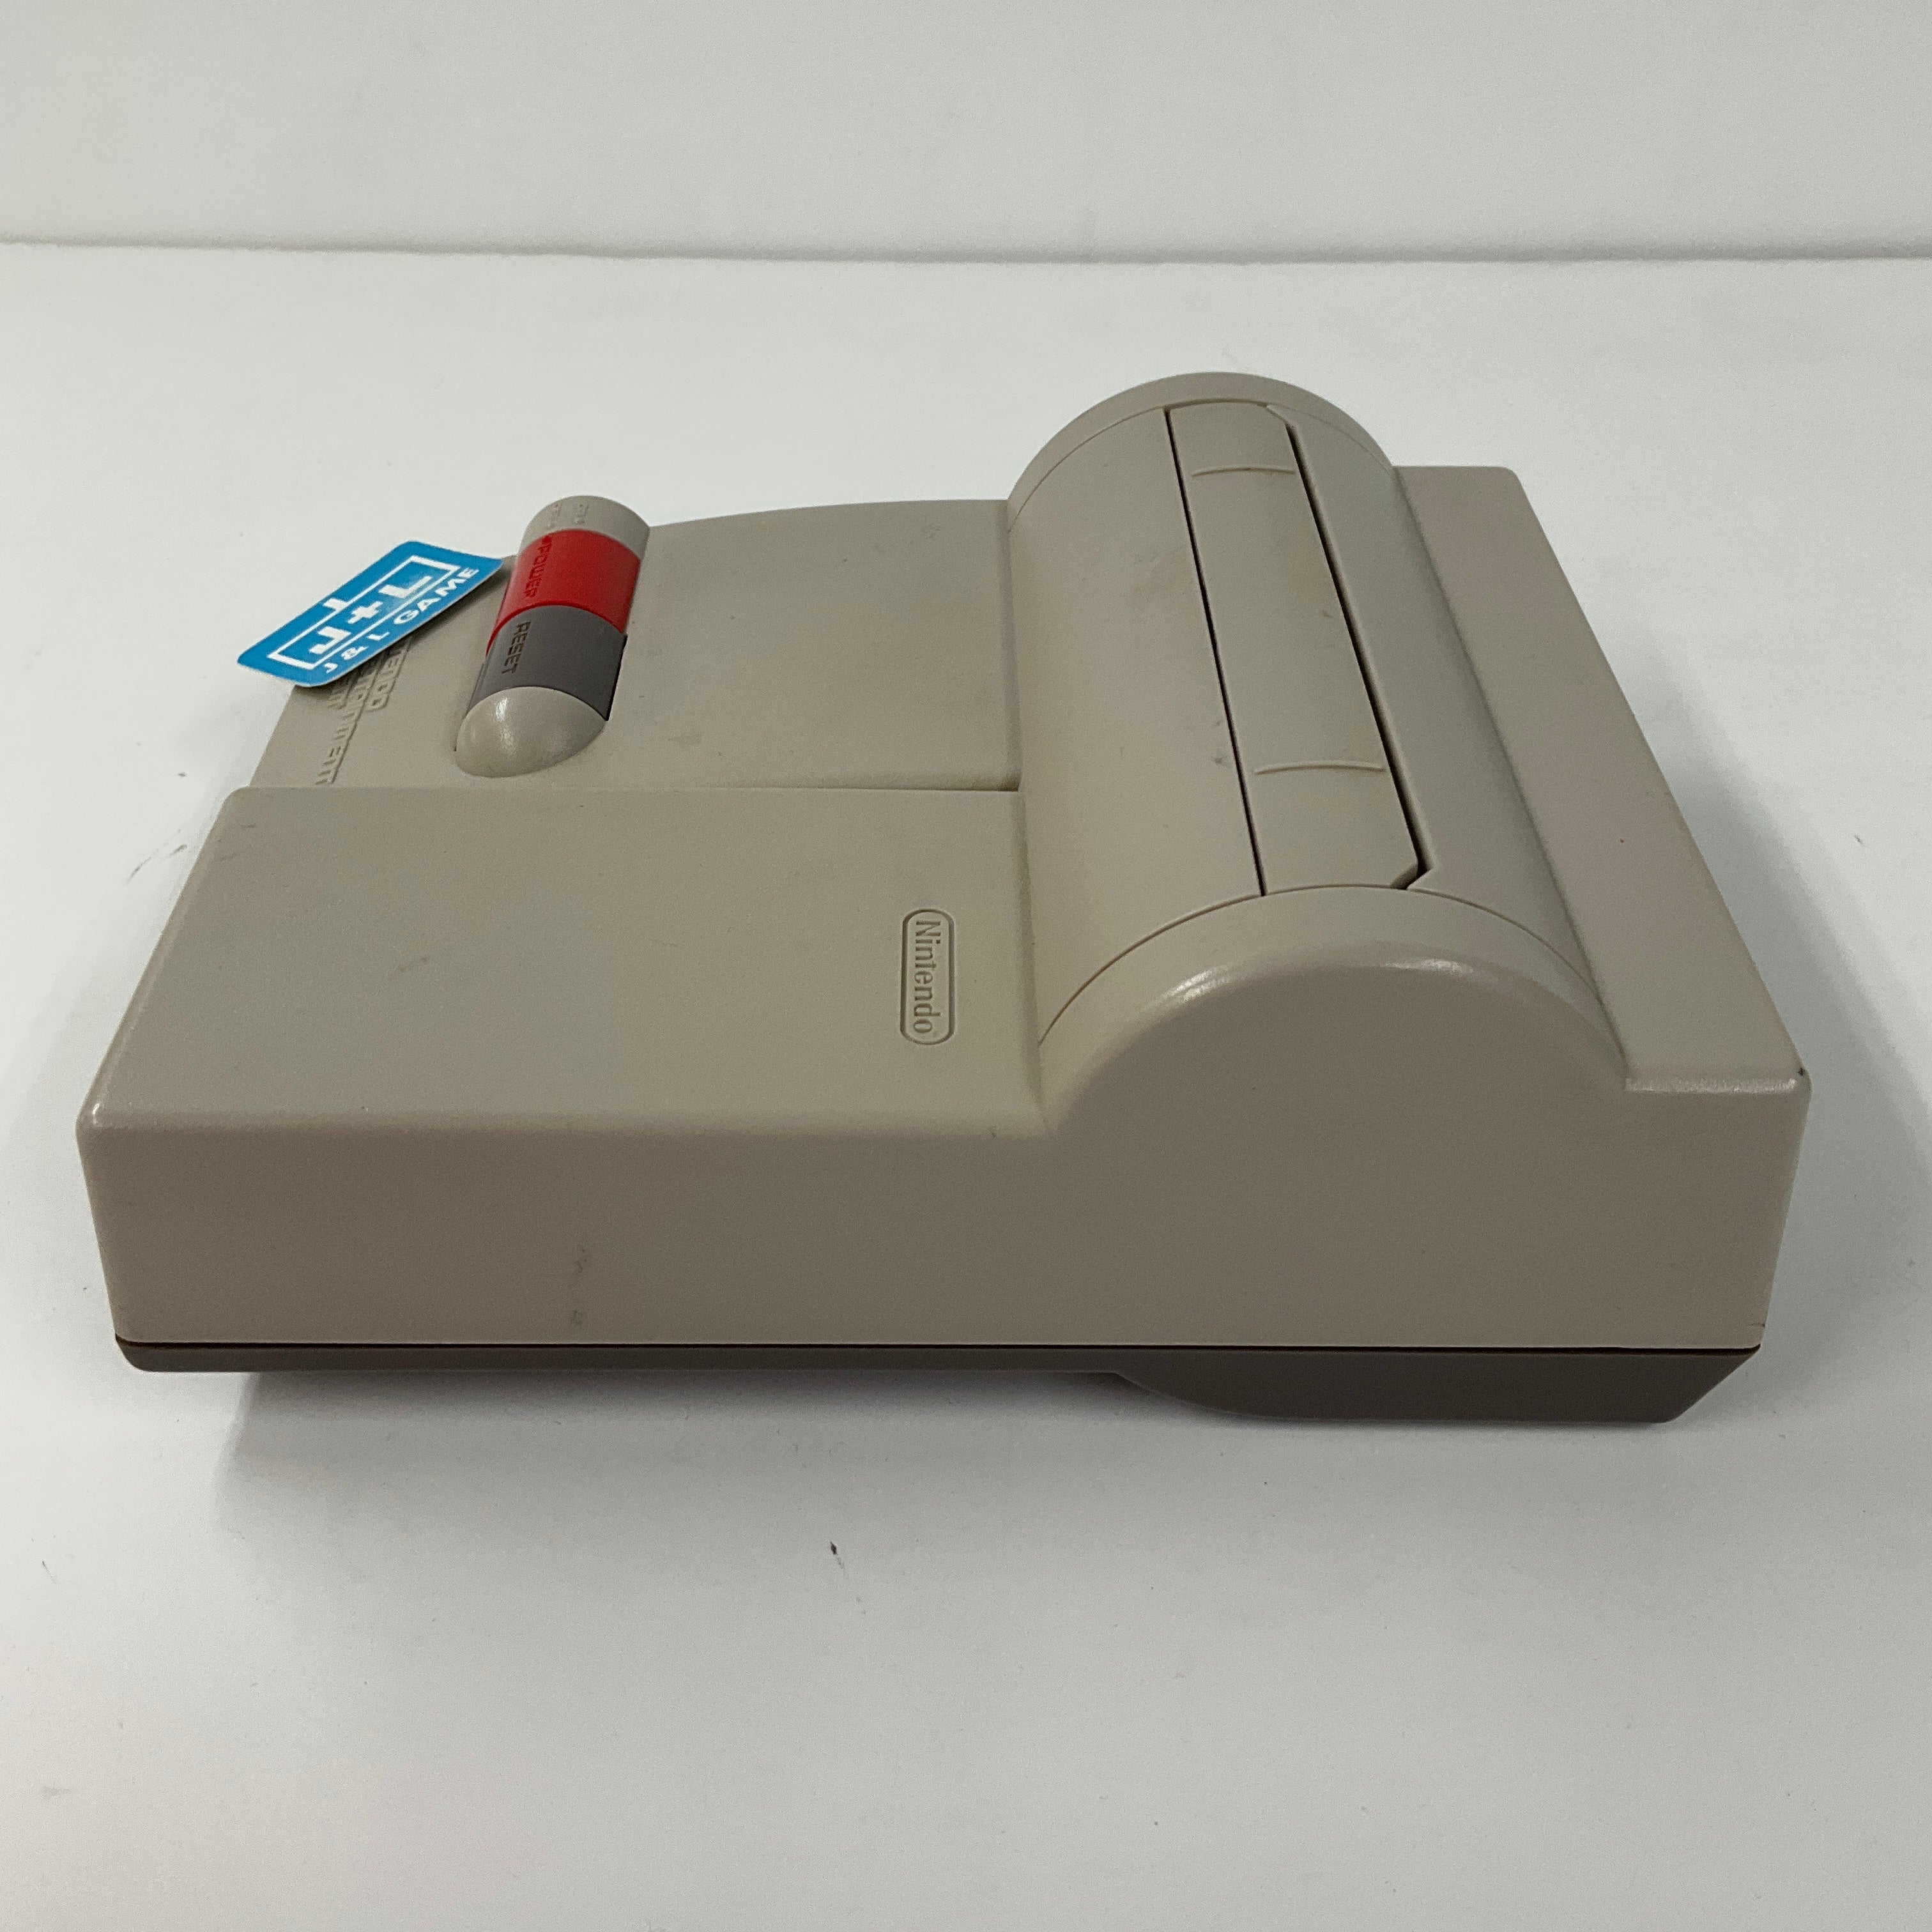 NES-101, Nintendo